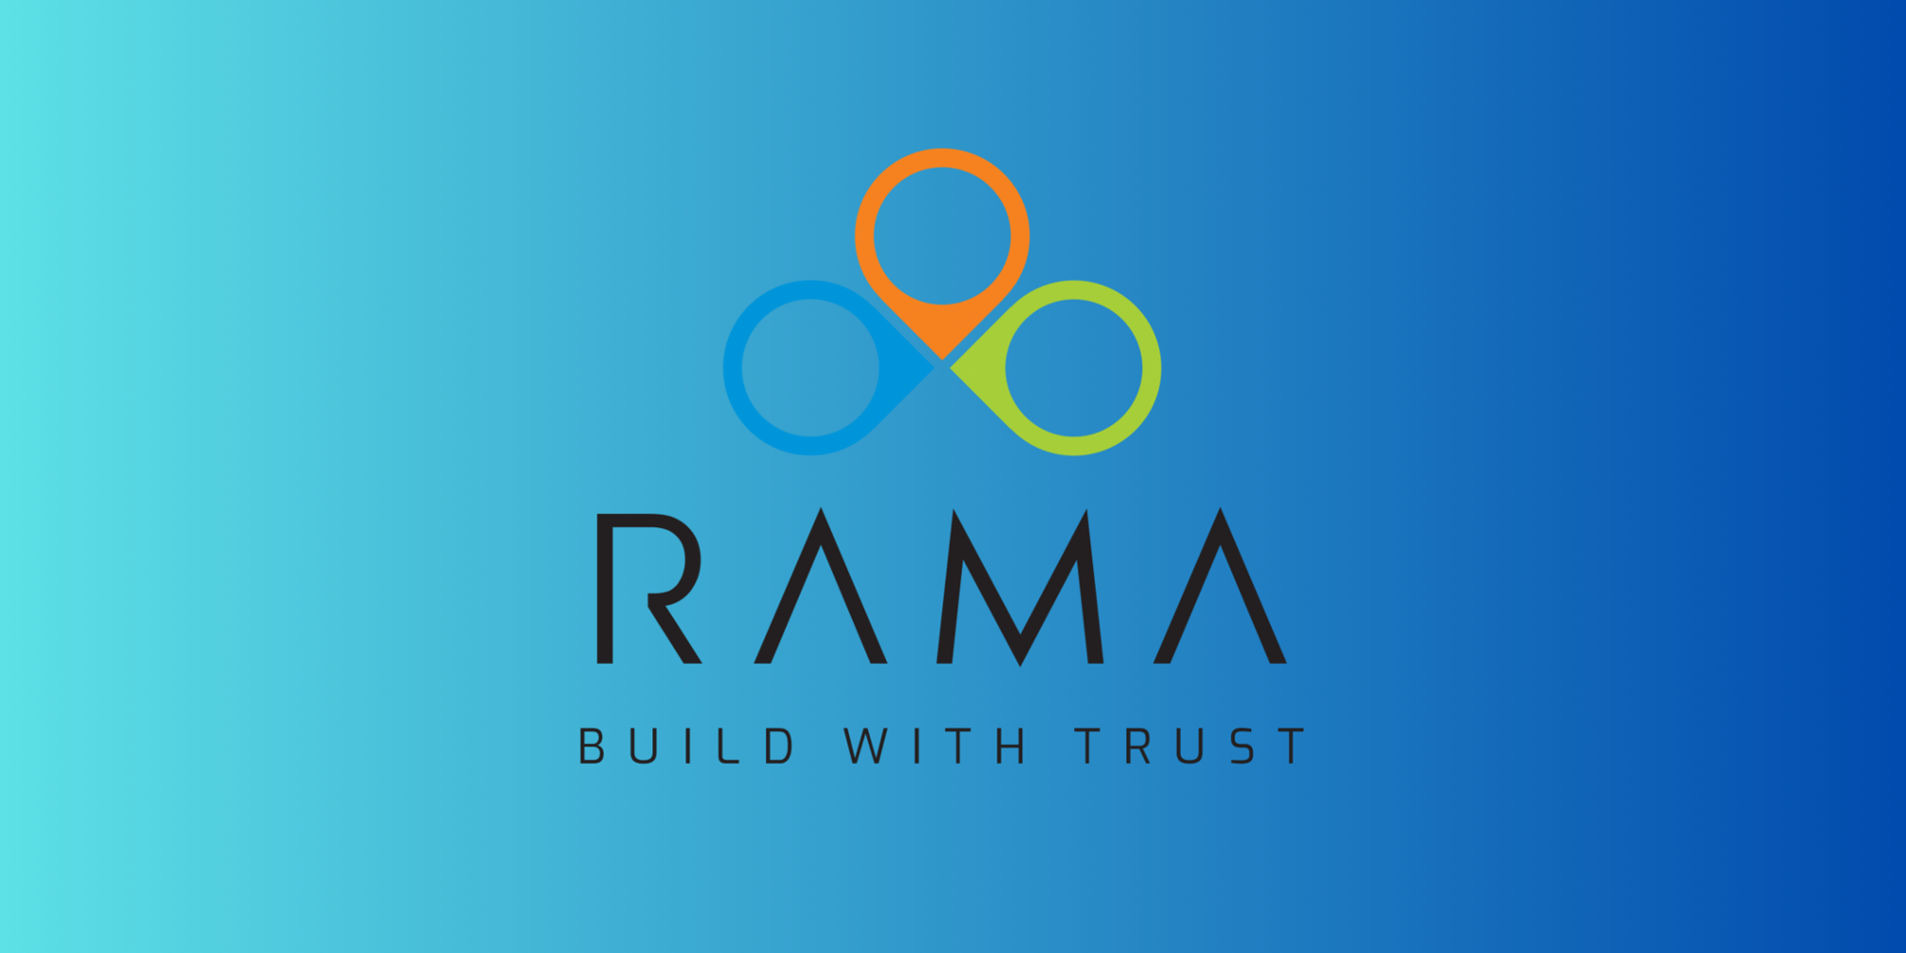 Rama Steel Share Price Target